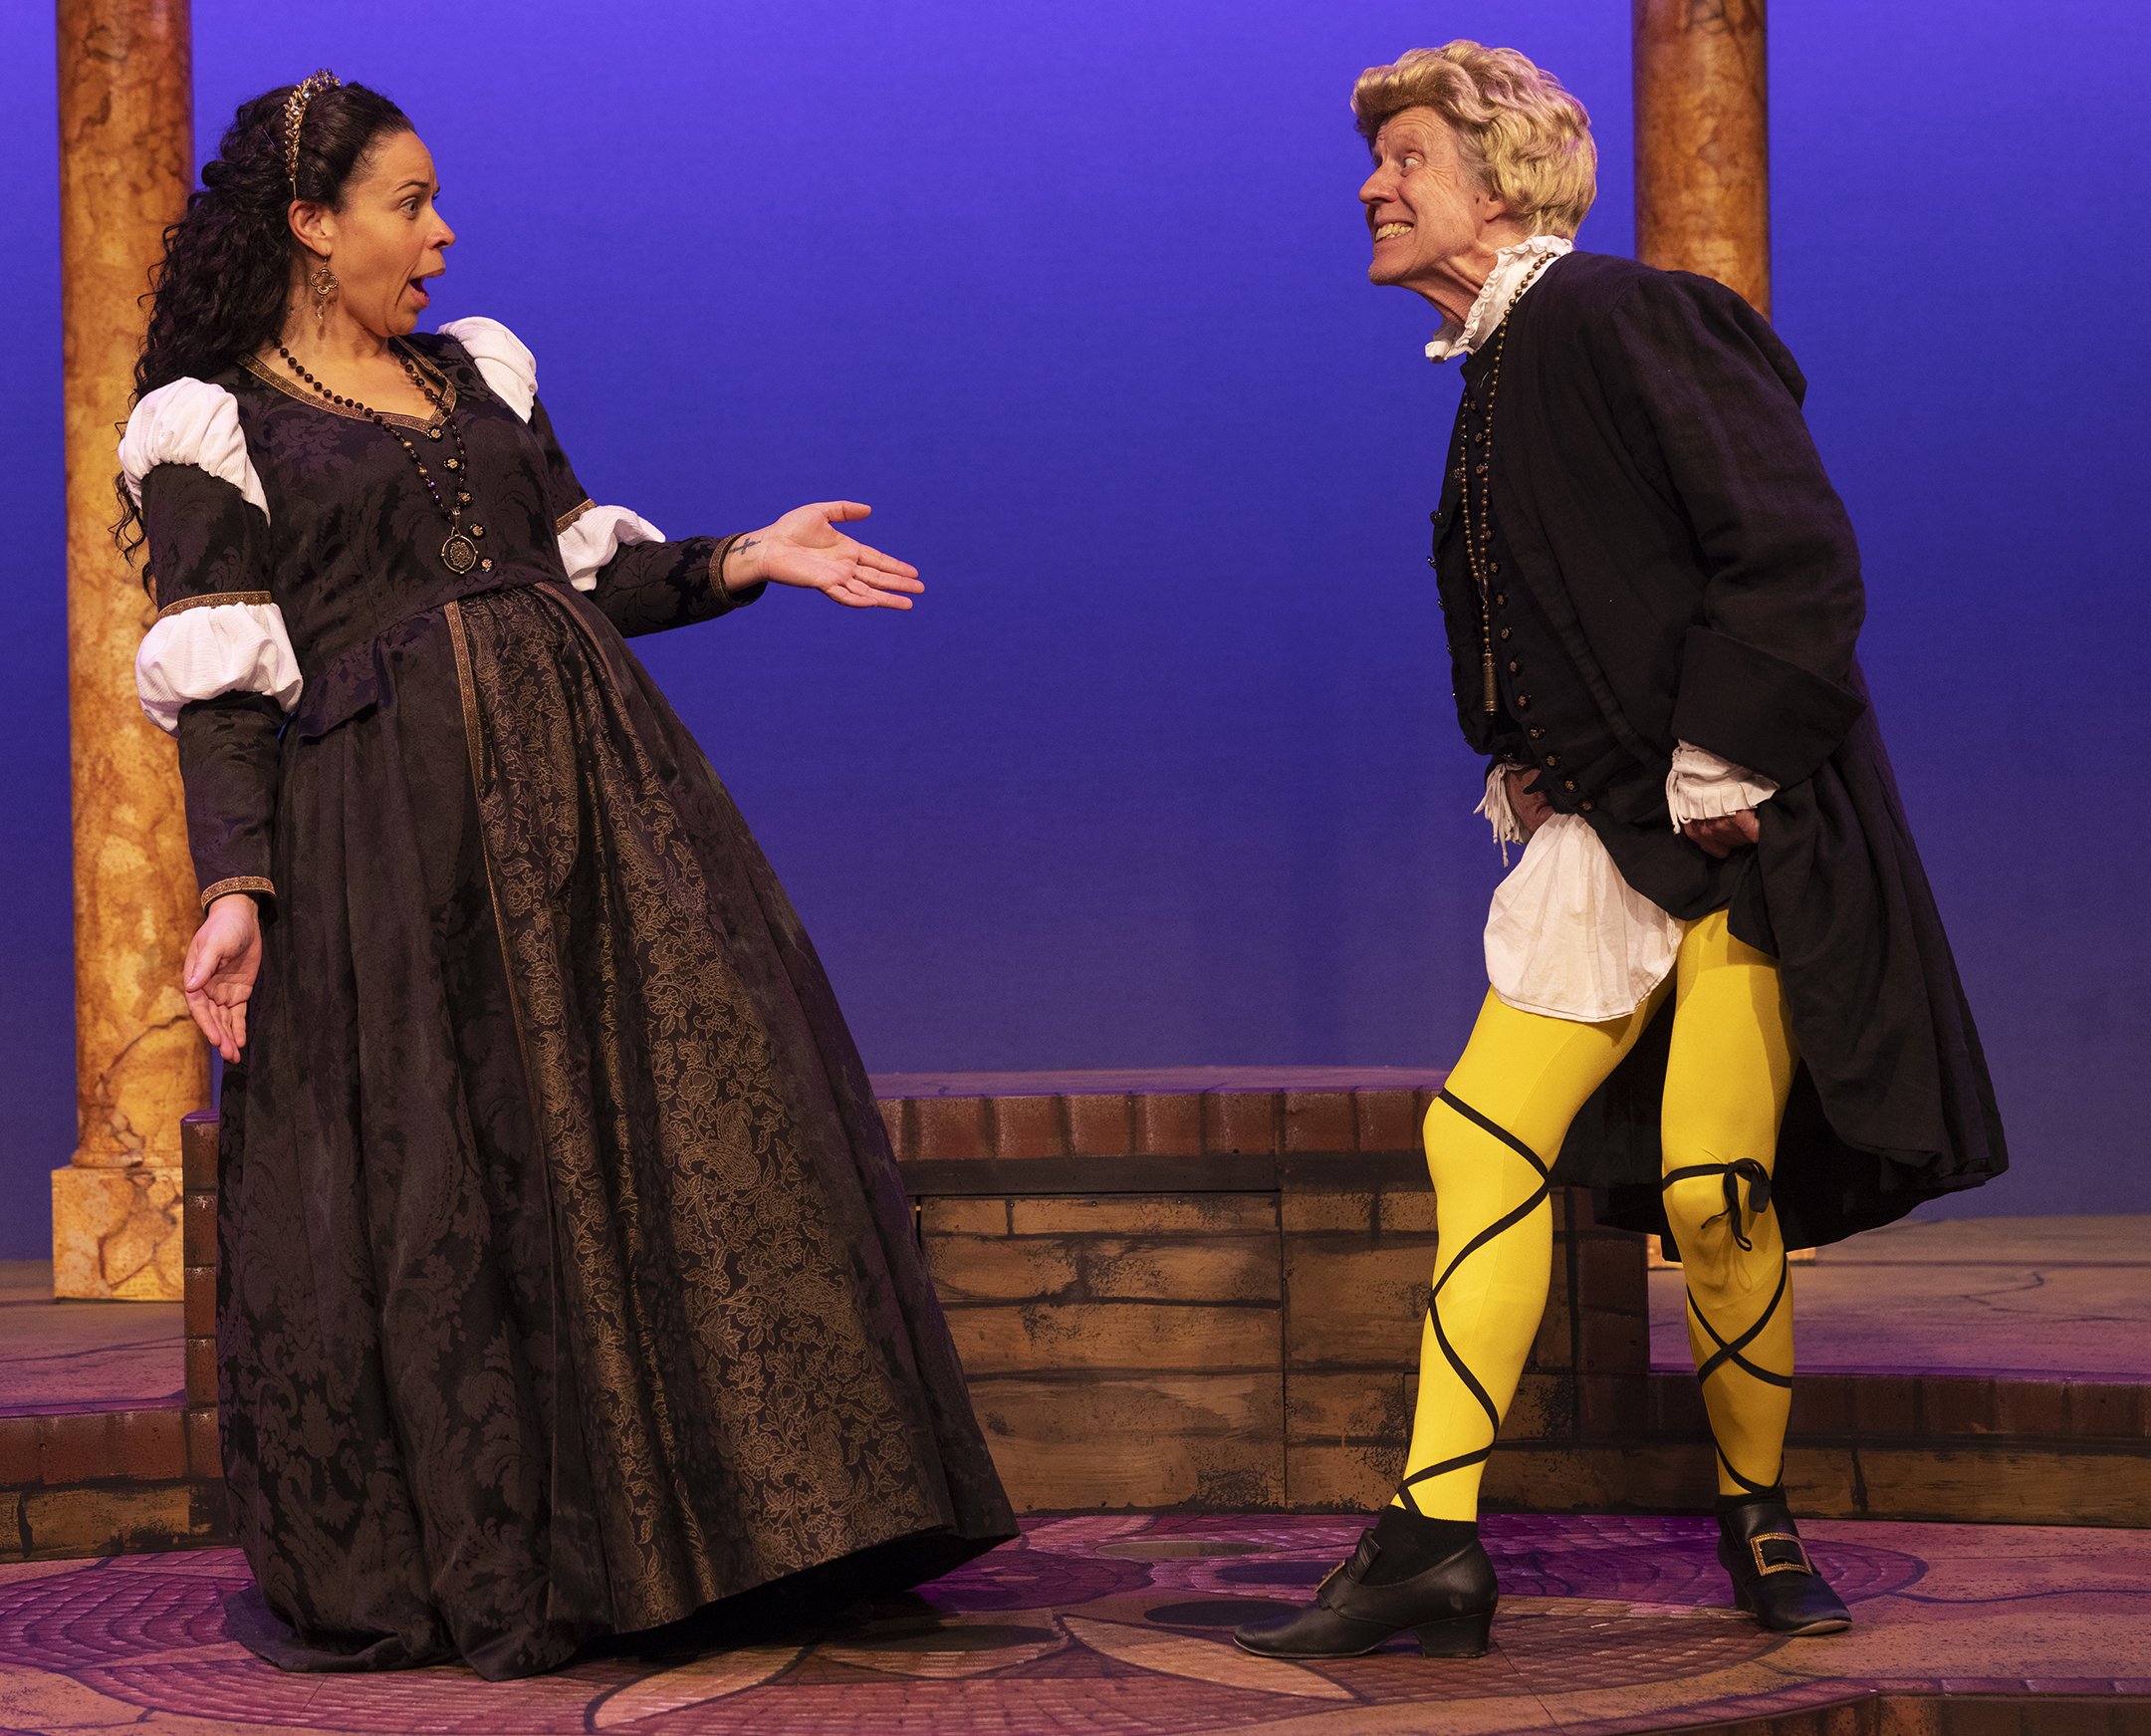 Carley Elizabeth Preston as Olivia and Joseph McGrath as Malvolio. Photo by Tim Fuller.